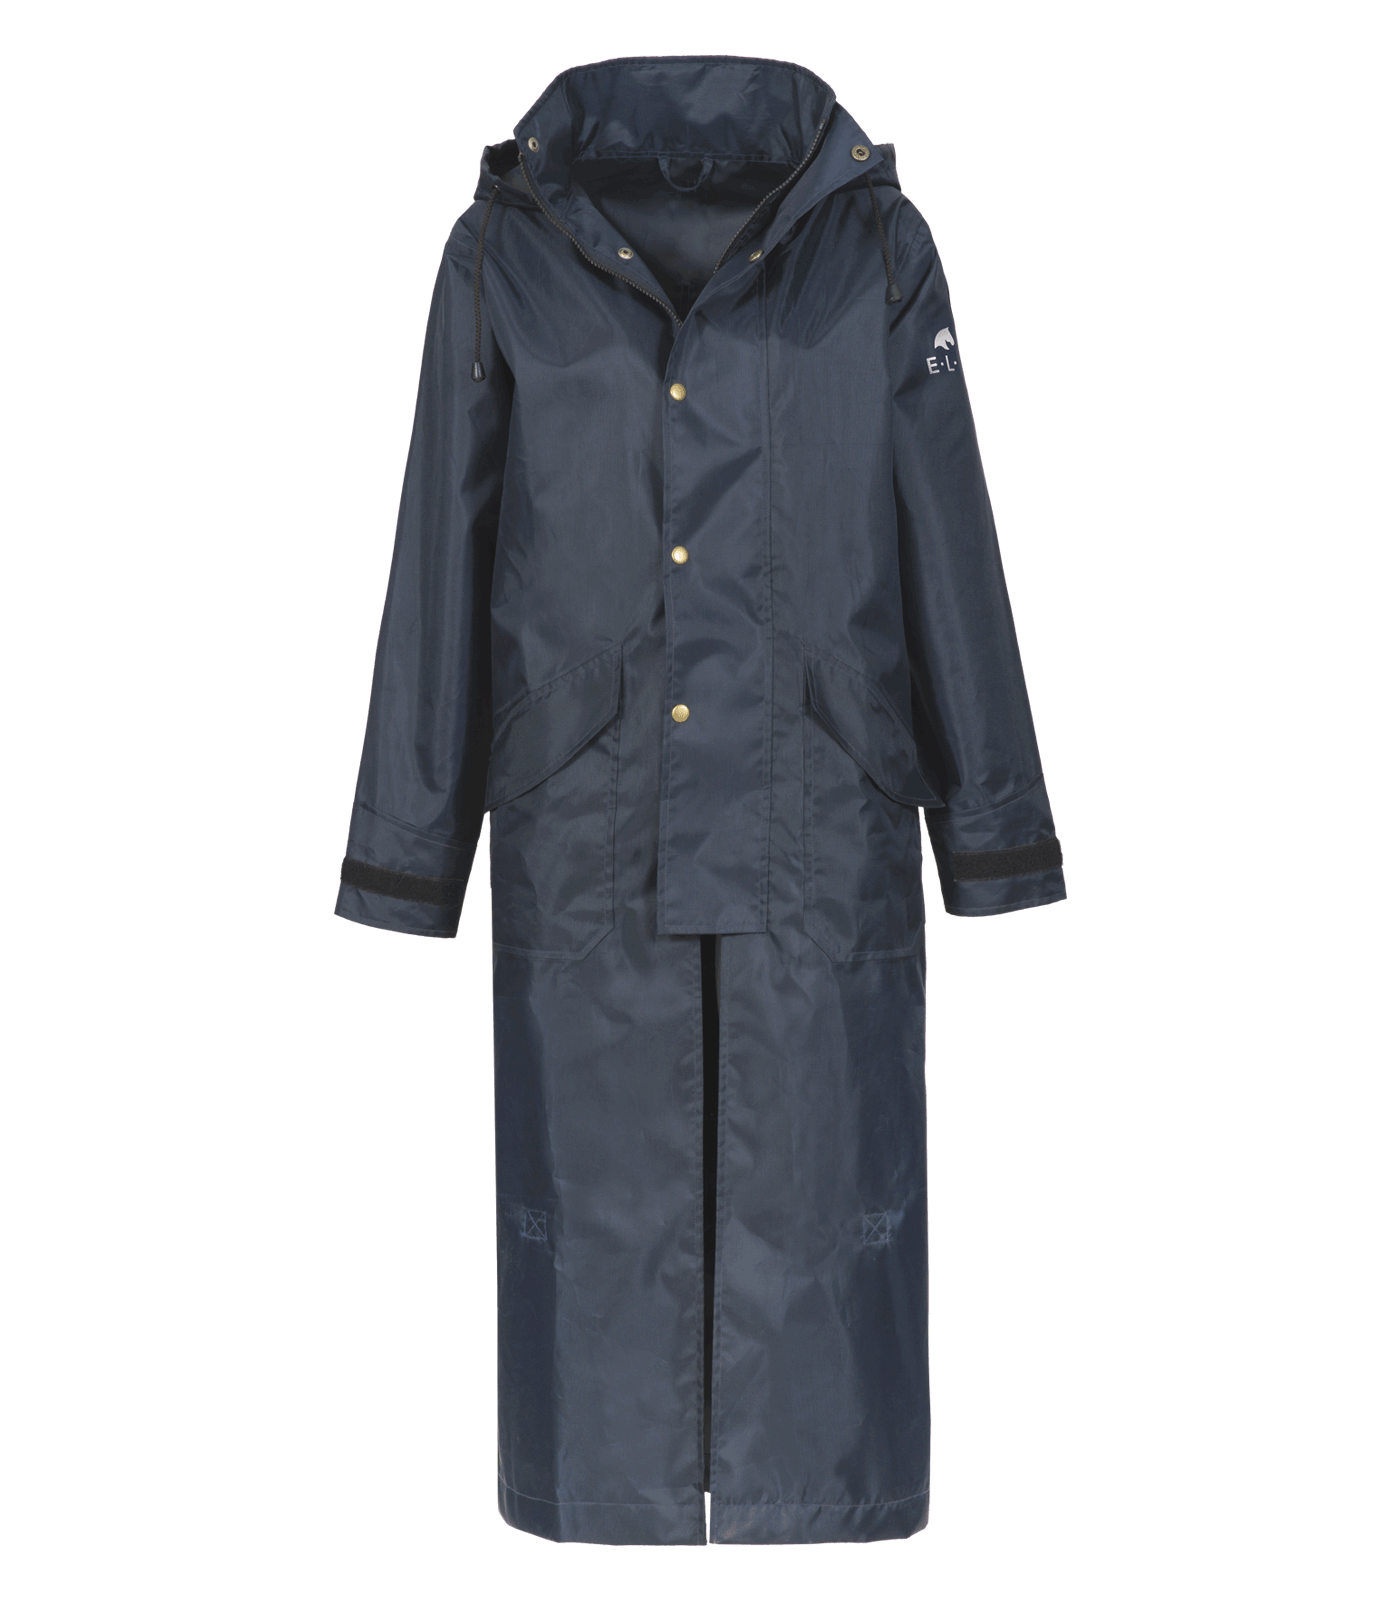 ELT Dover Long Raincoat